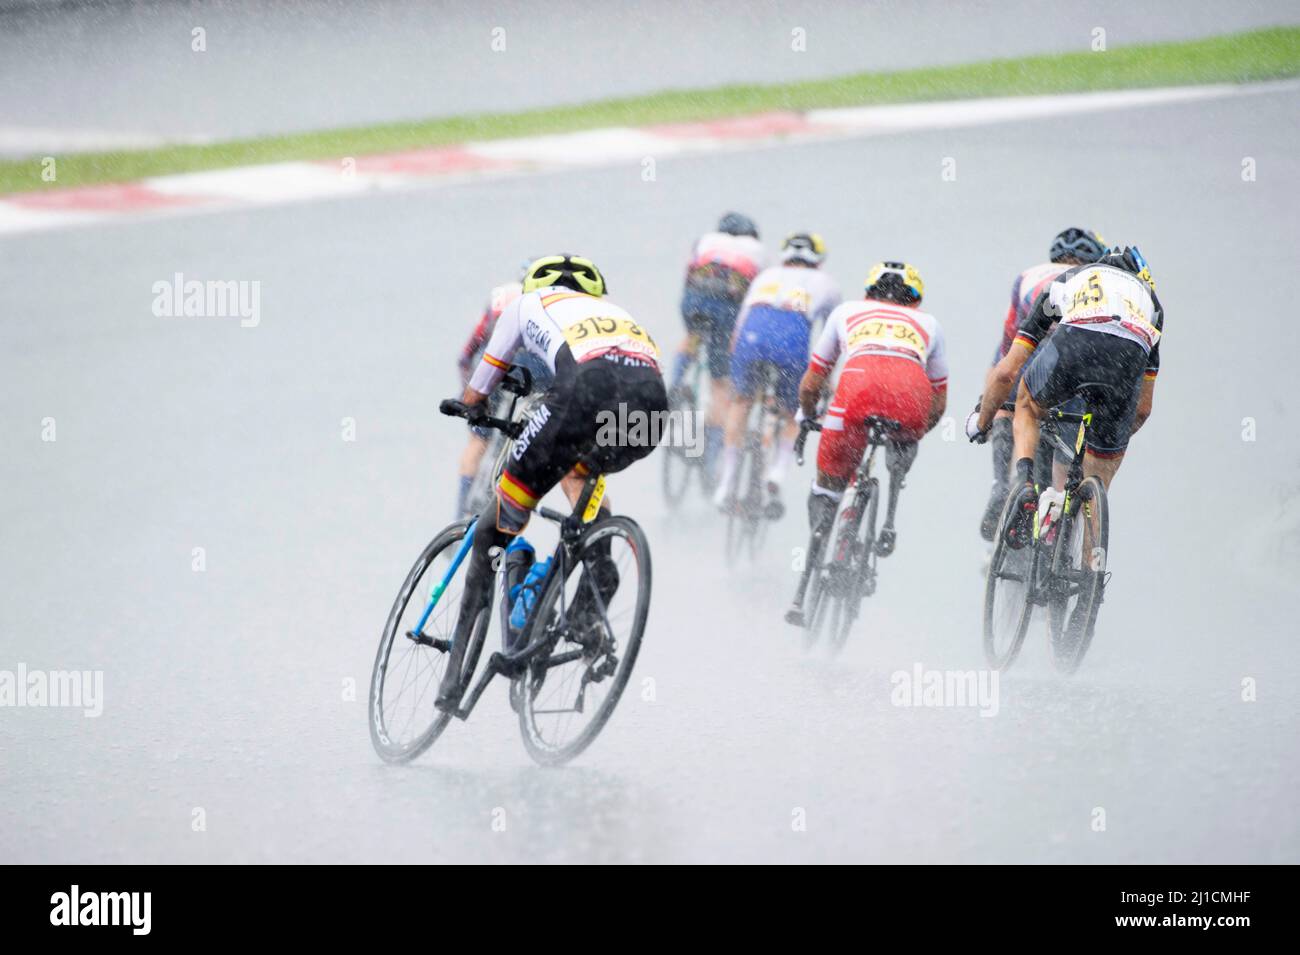 Richard Argiles of Spain follows the peloton around a slippery corner during a heavy rain in the men's paracycling road race, Tokyo 2020 Paralympics. Stock Photo